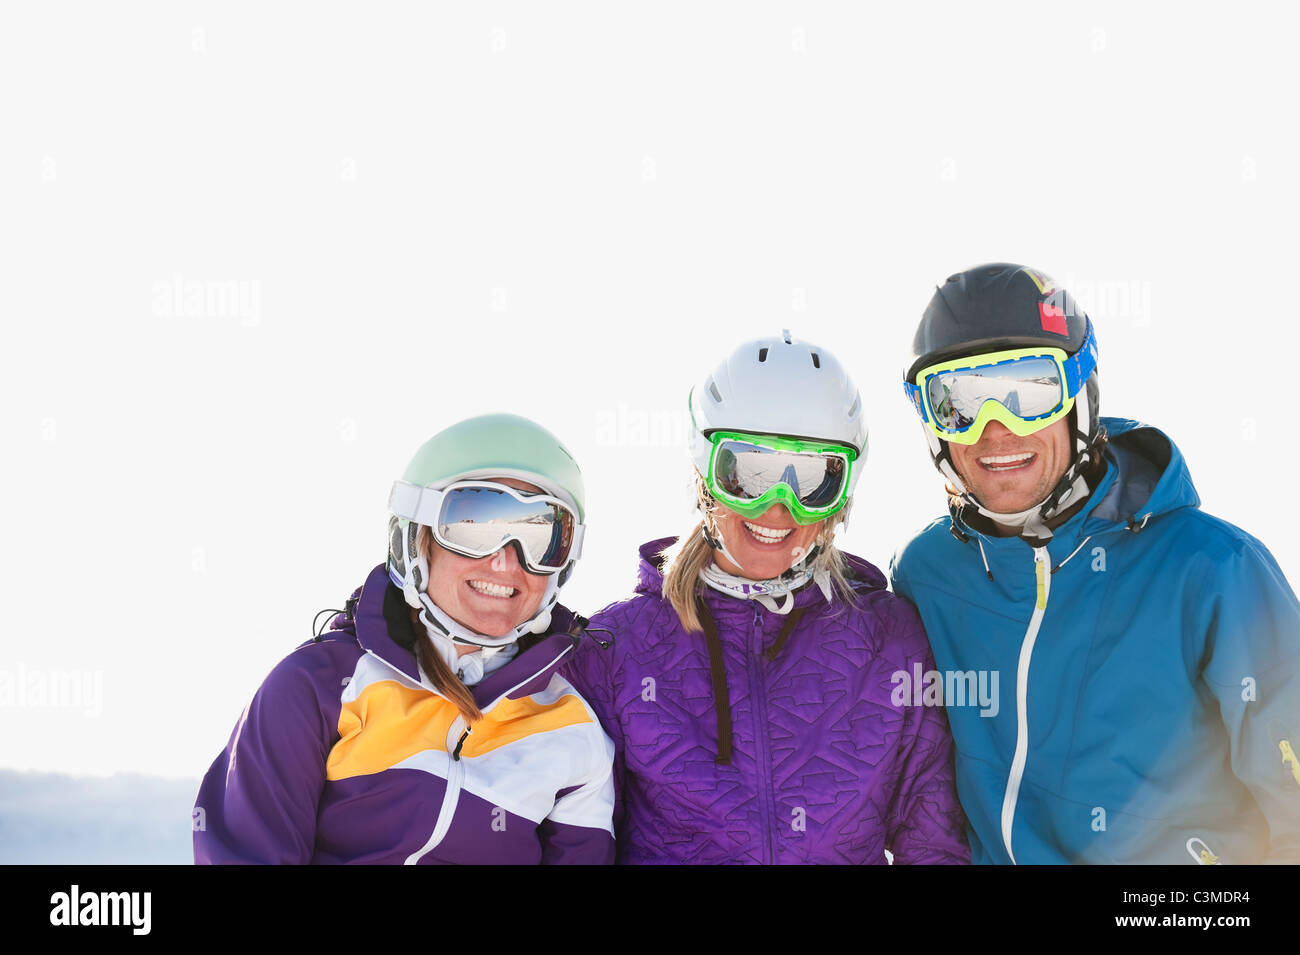 L'Italie, Trentin-Haut-Adige, Alto Adige, Bolzano, Alpe di Siusi, groupe de personnes ski, smiling Banque D'Images